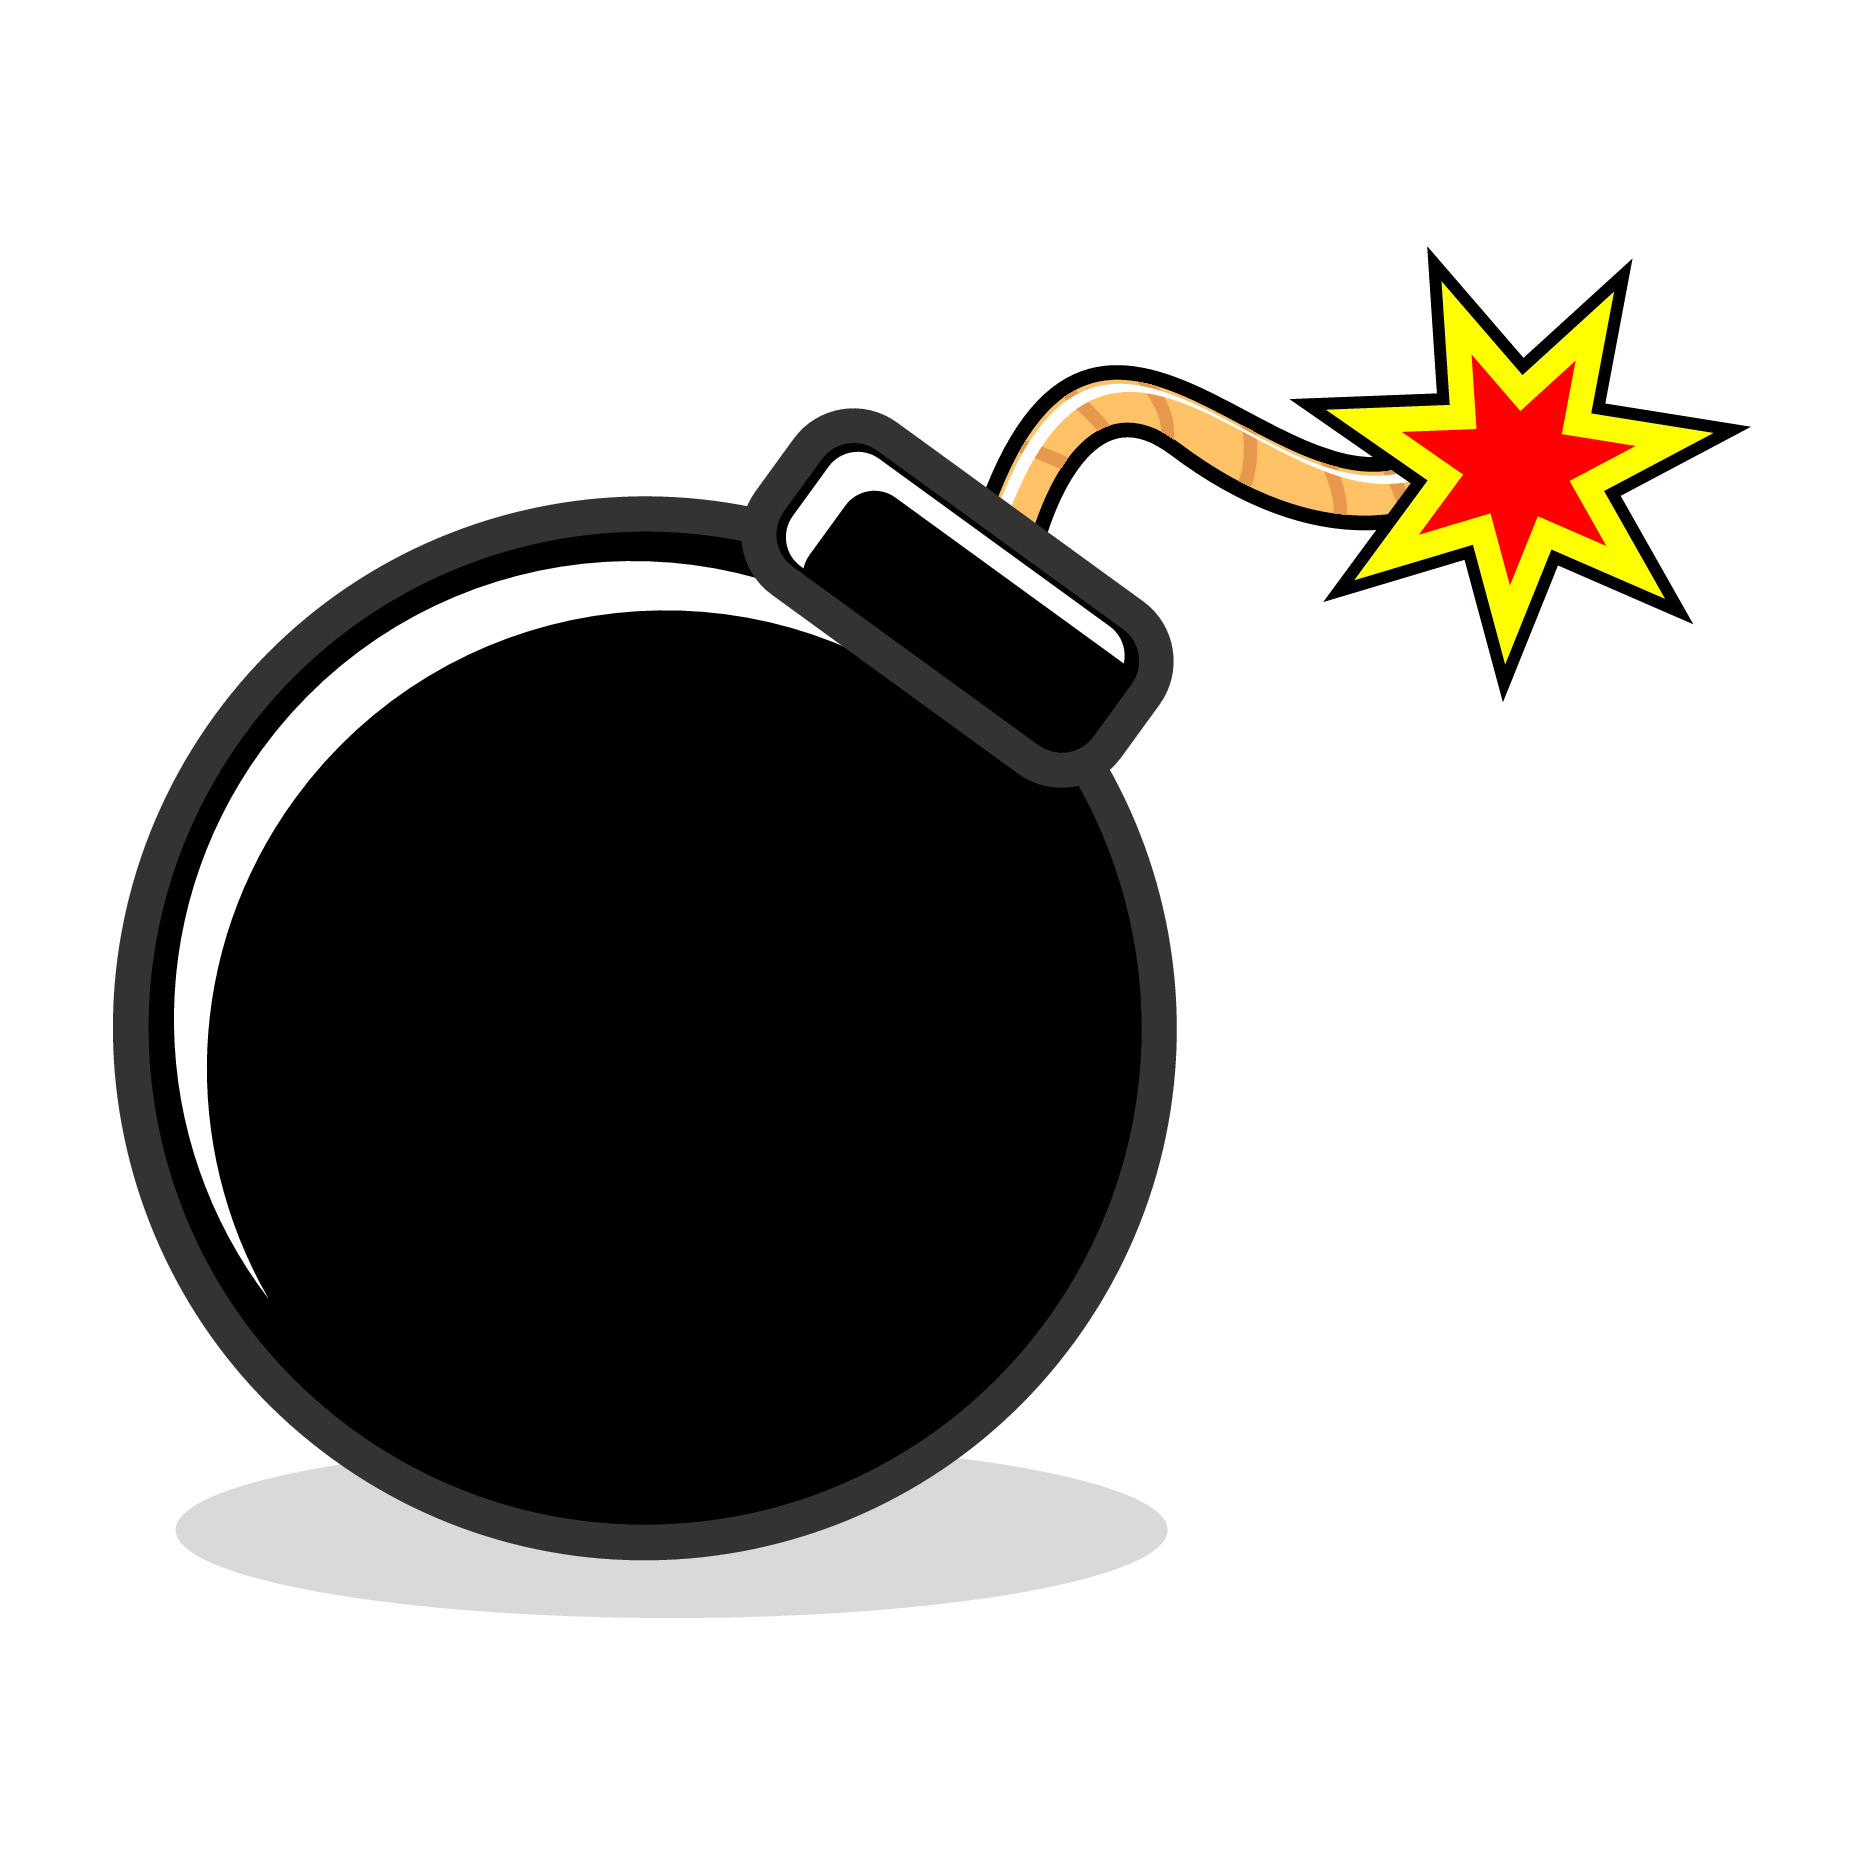 Cartoon Bomb | Free Vector Download